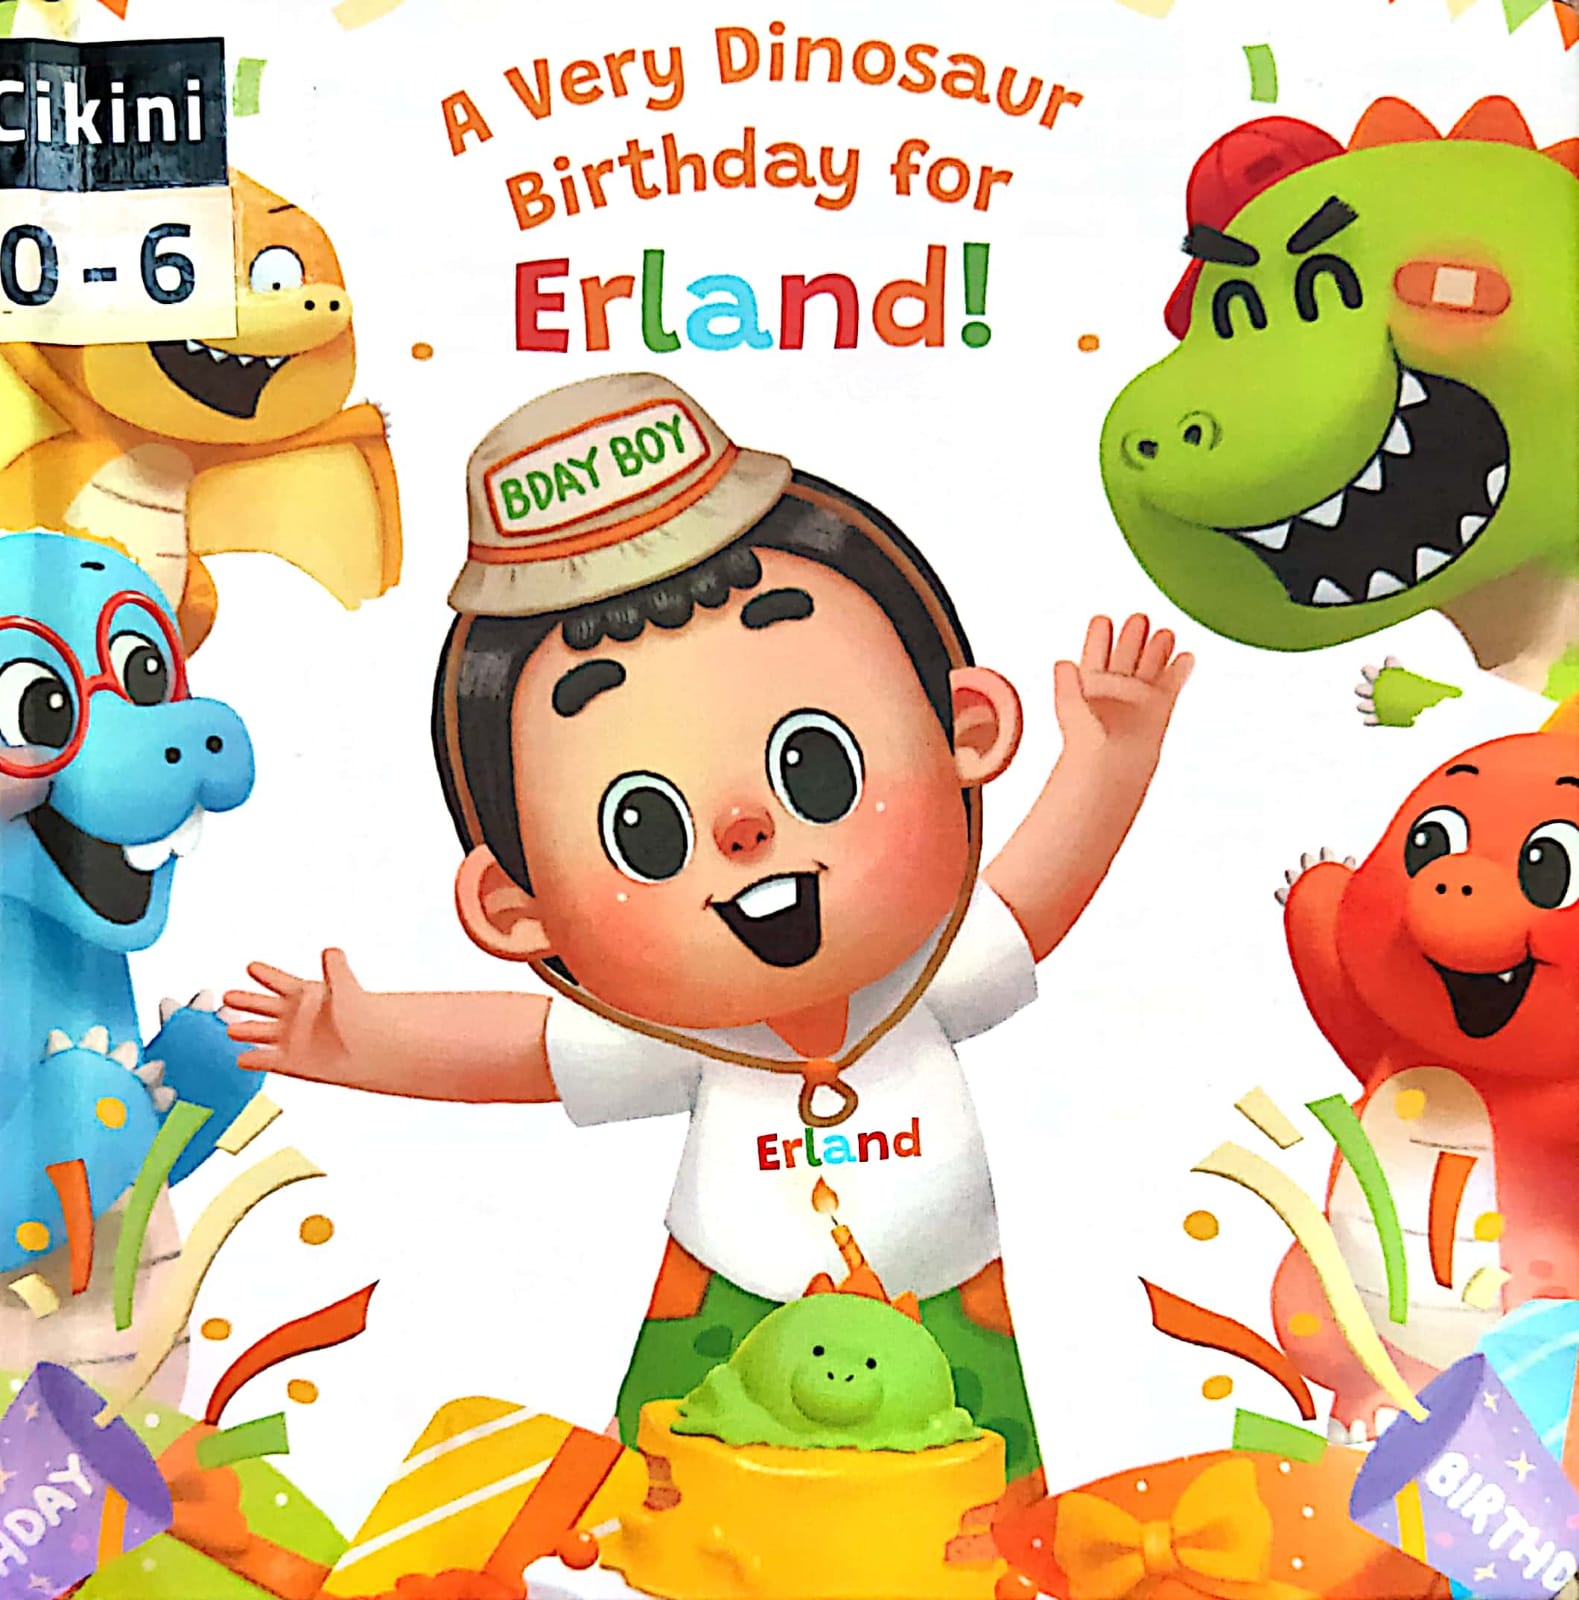 A very dinosaur birthday for Erland